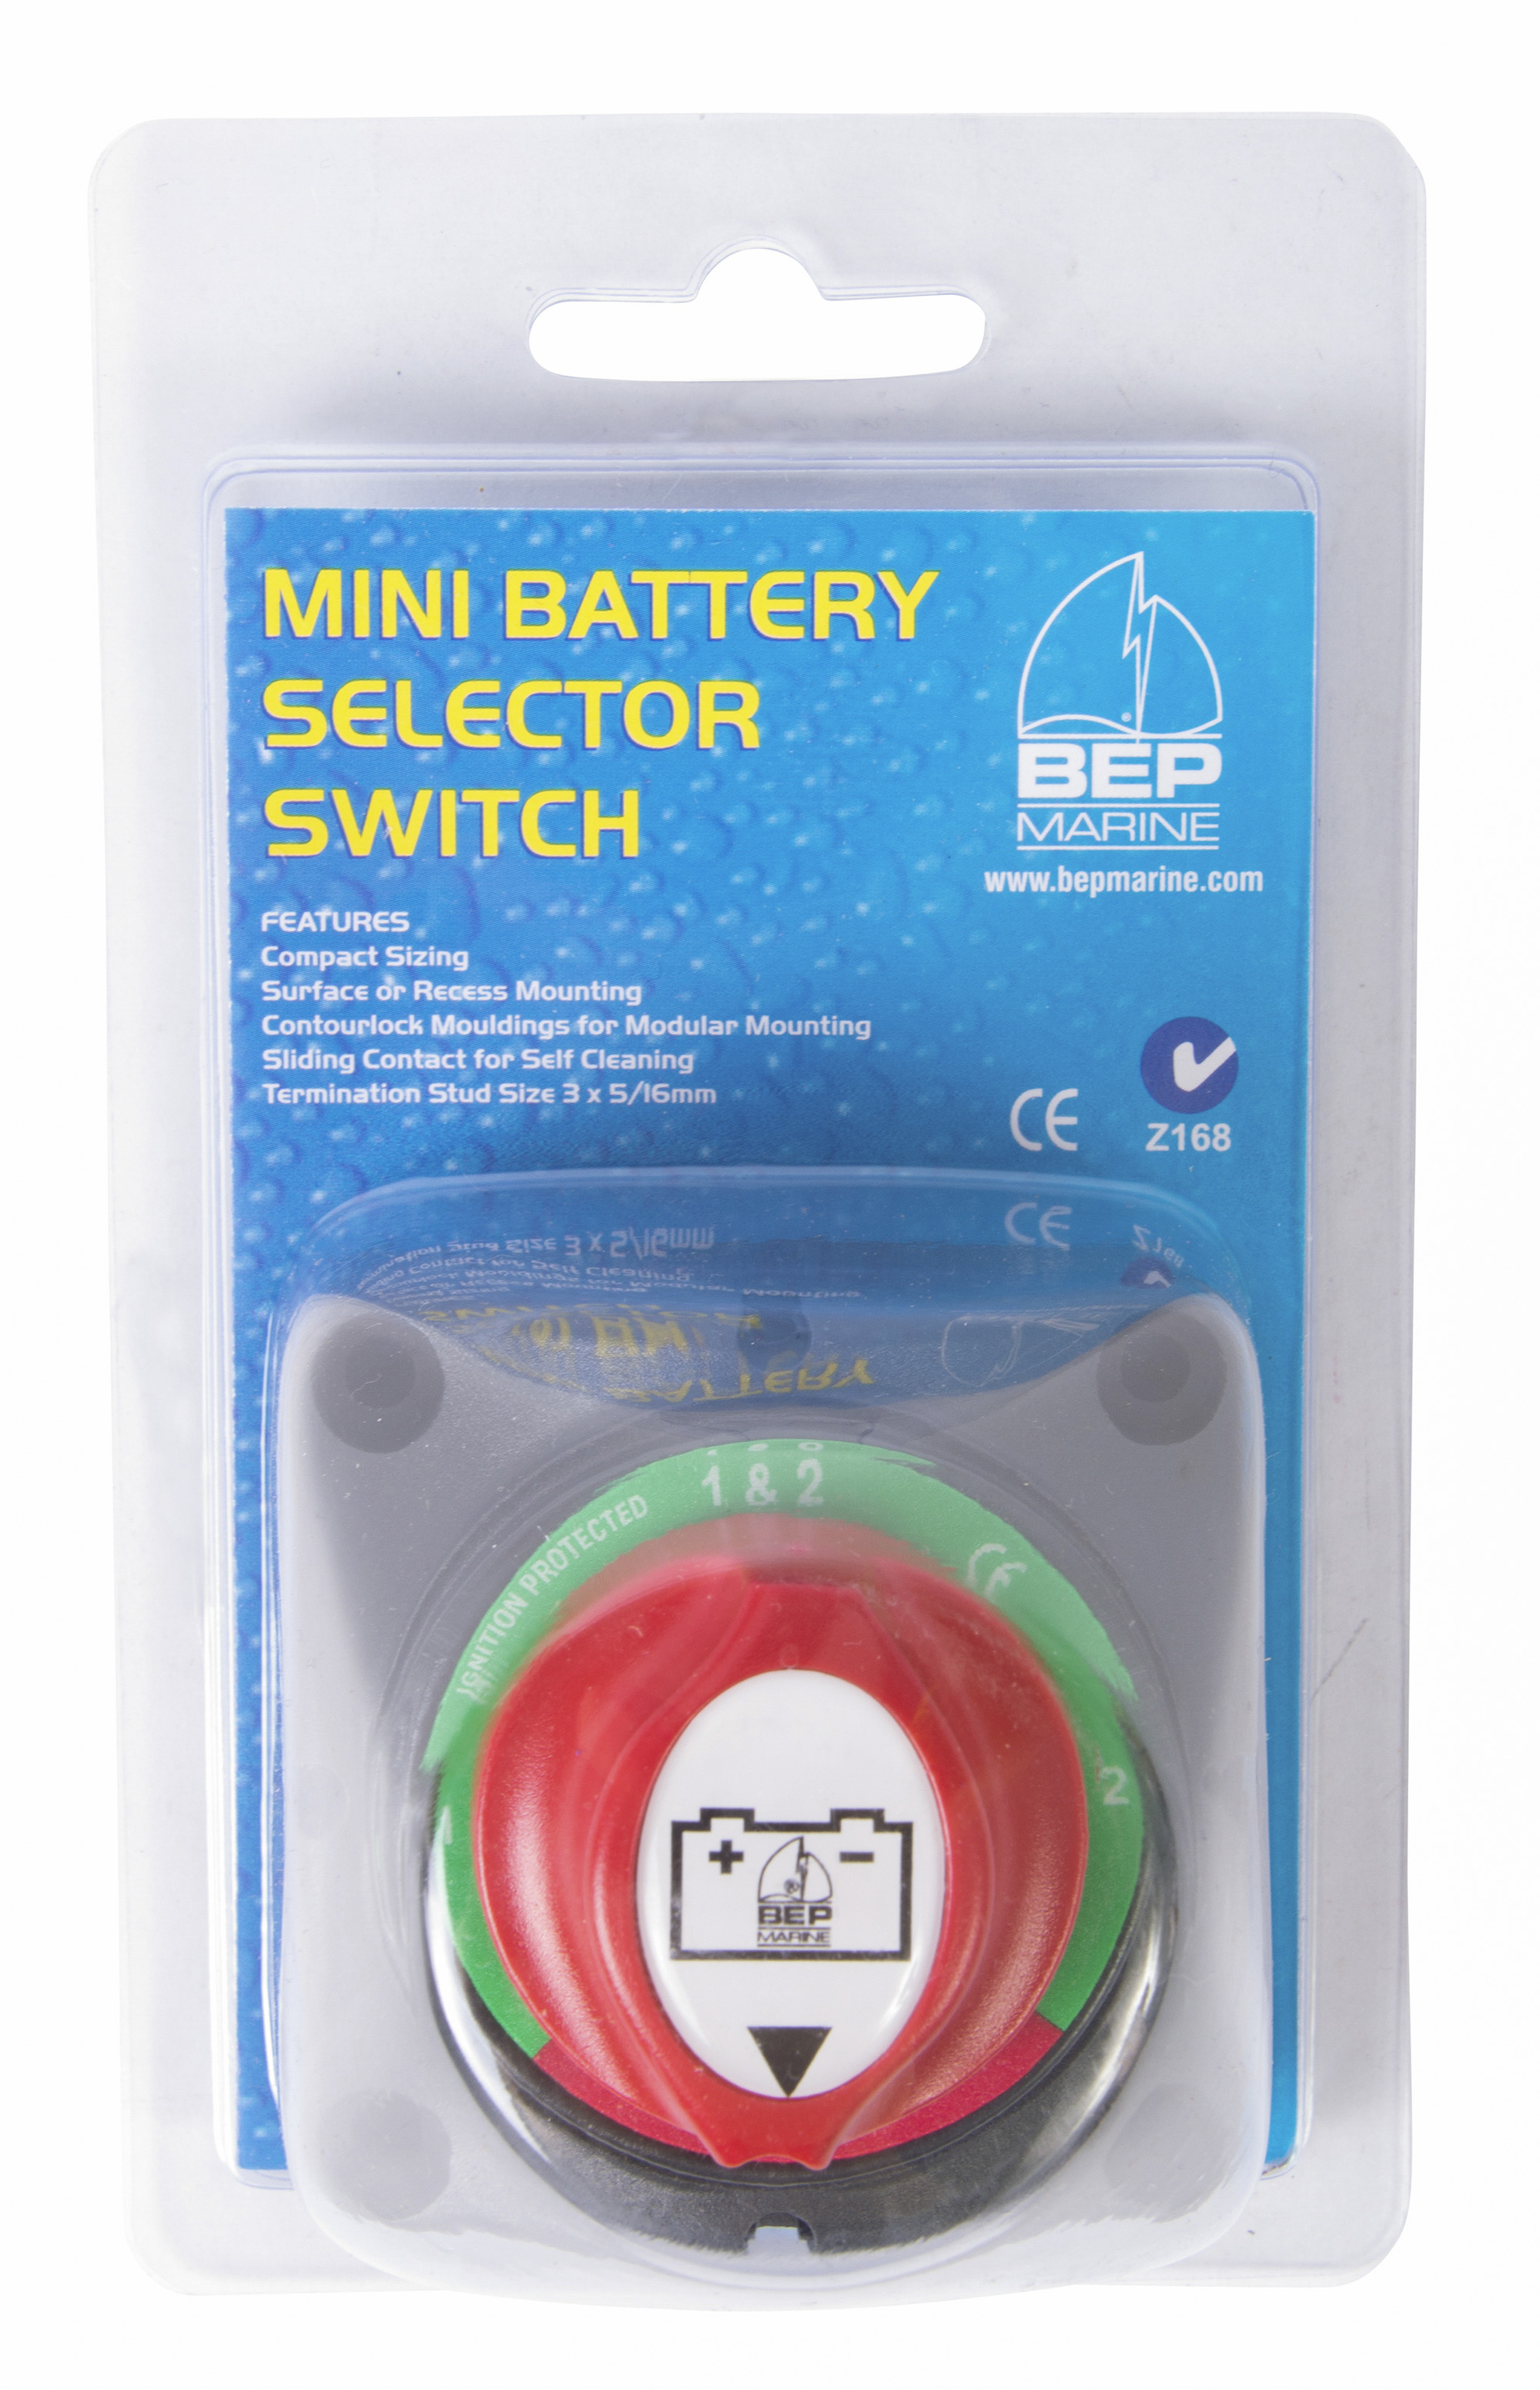 Mini Battery Selector Switch